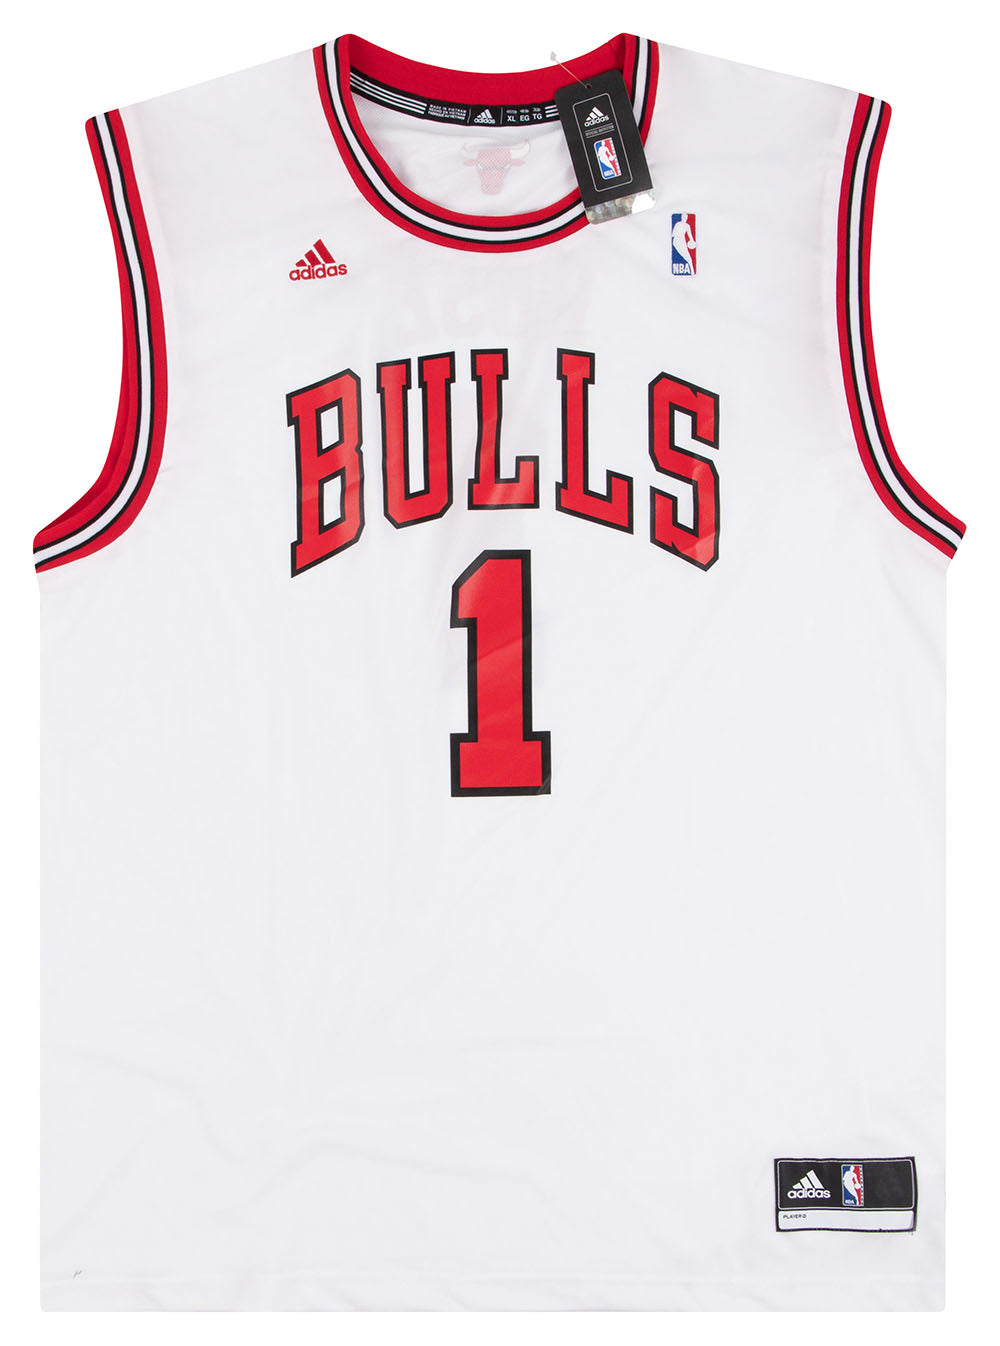 Authentic Rookie Derrick Rose Chicago Bulls white jersey adidas sz